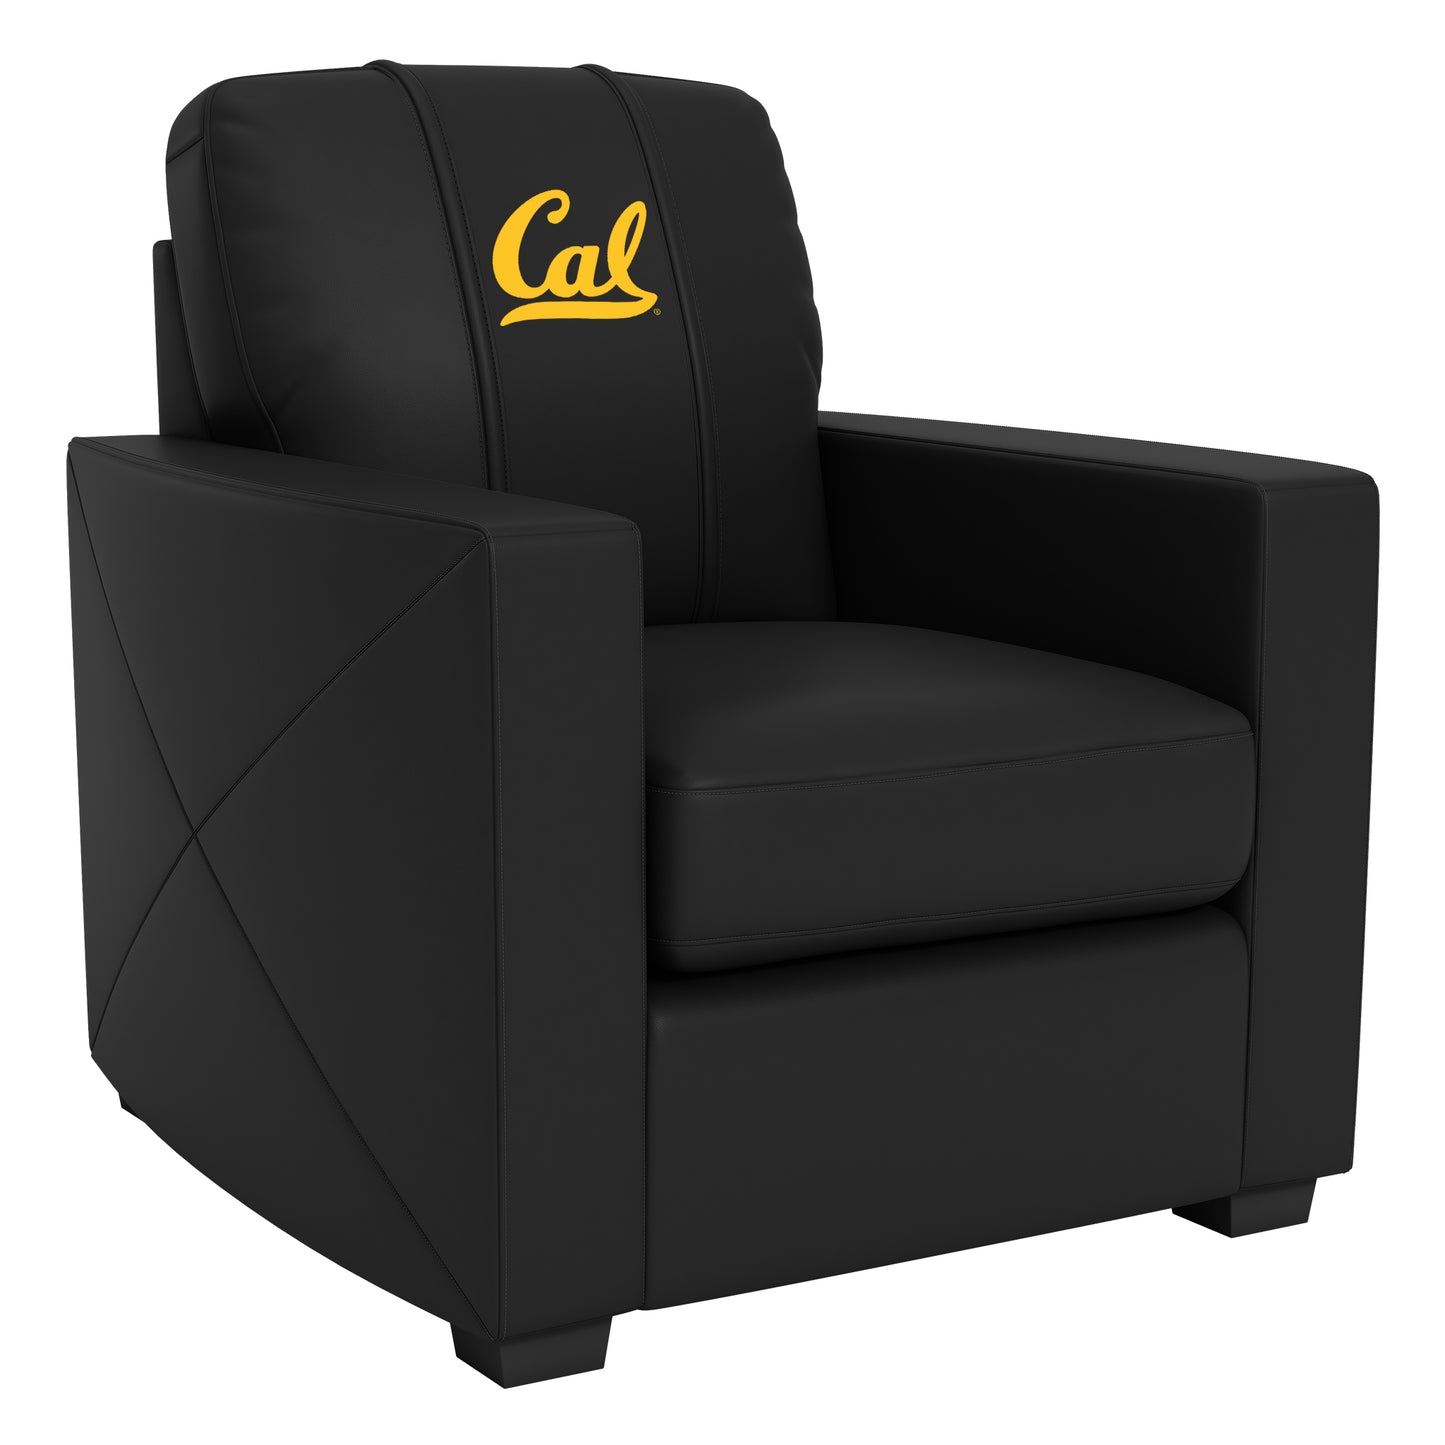 Silver Club Chair with California Golden Bears Logo